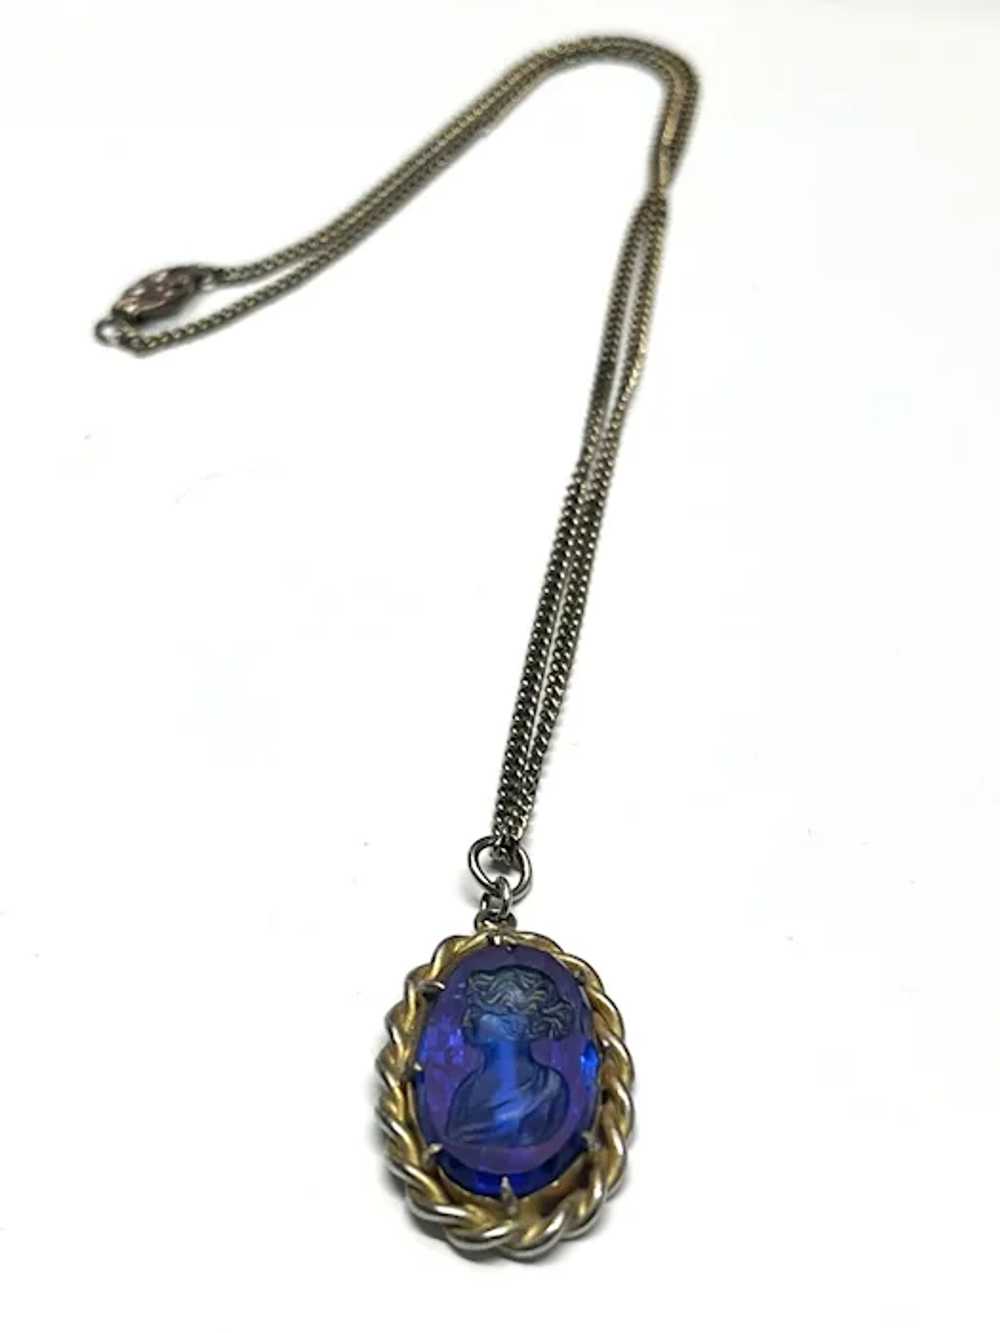 Vintage Blue Glass Cameo Pendant Necklace - image 2